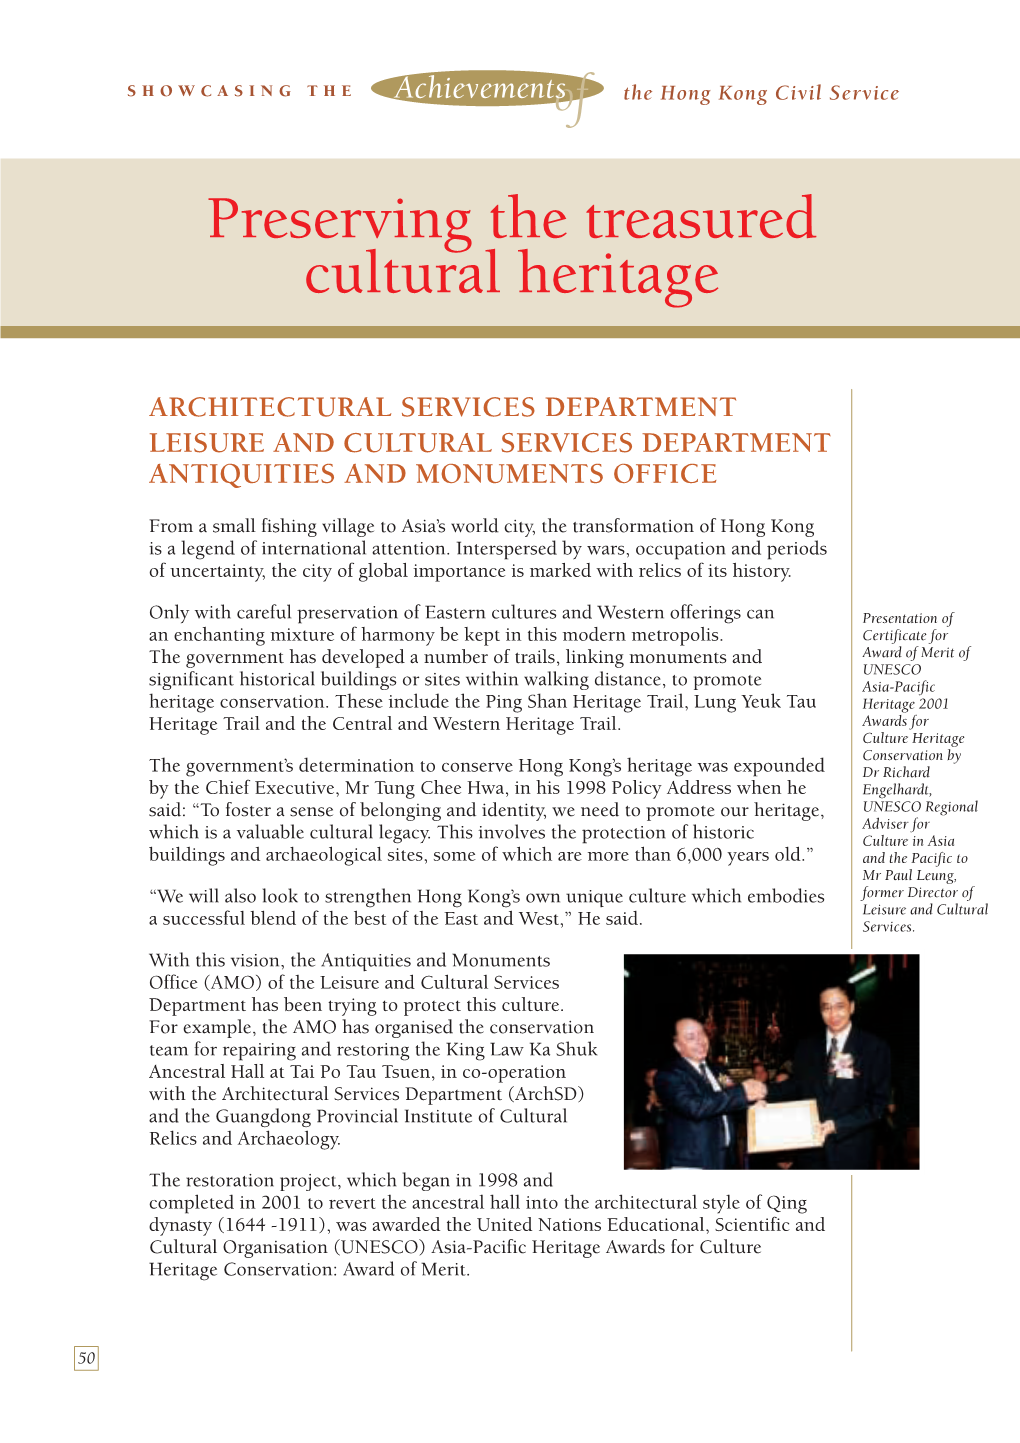 Preserving the Treasured Cultural Heritage